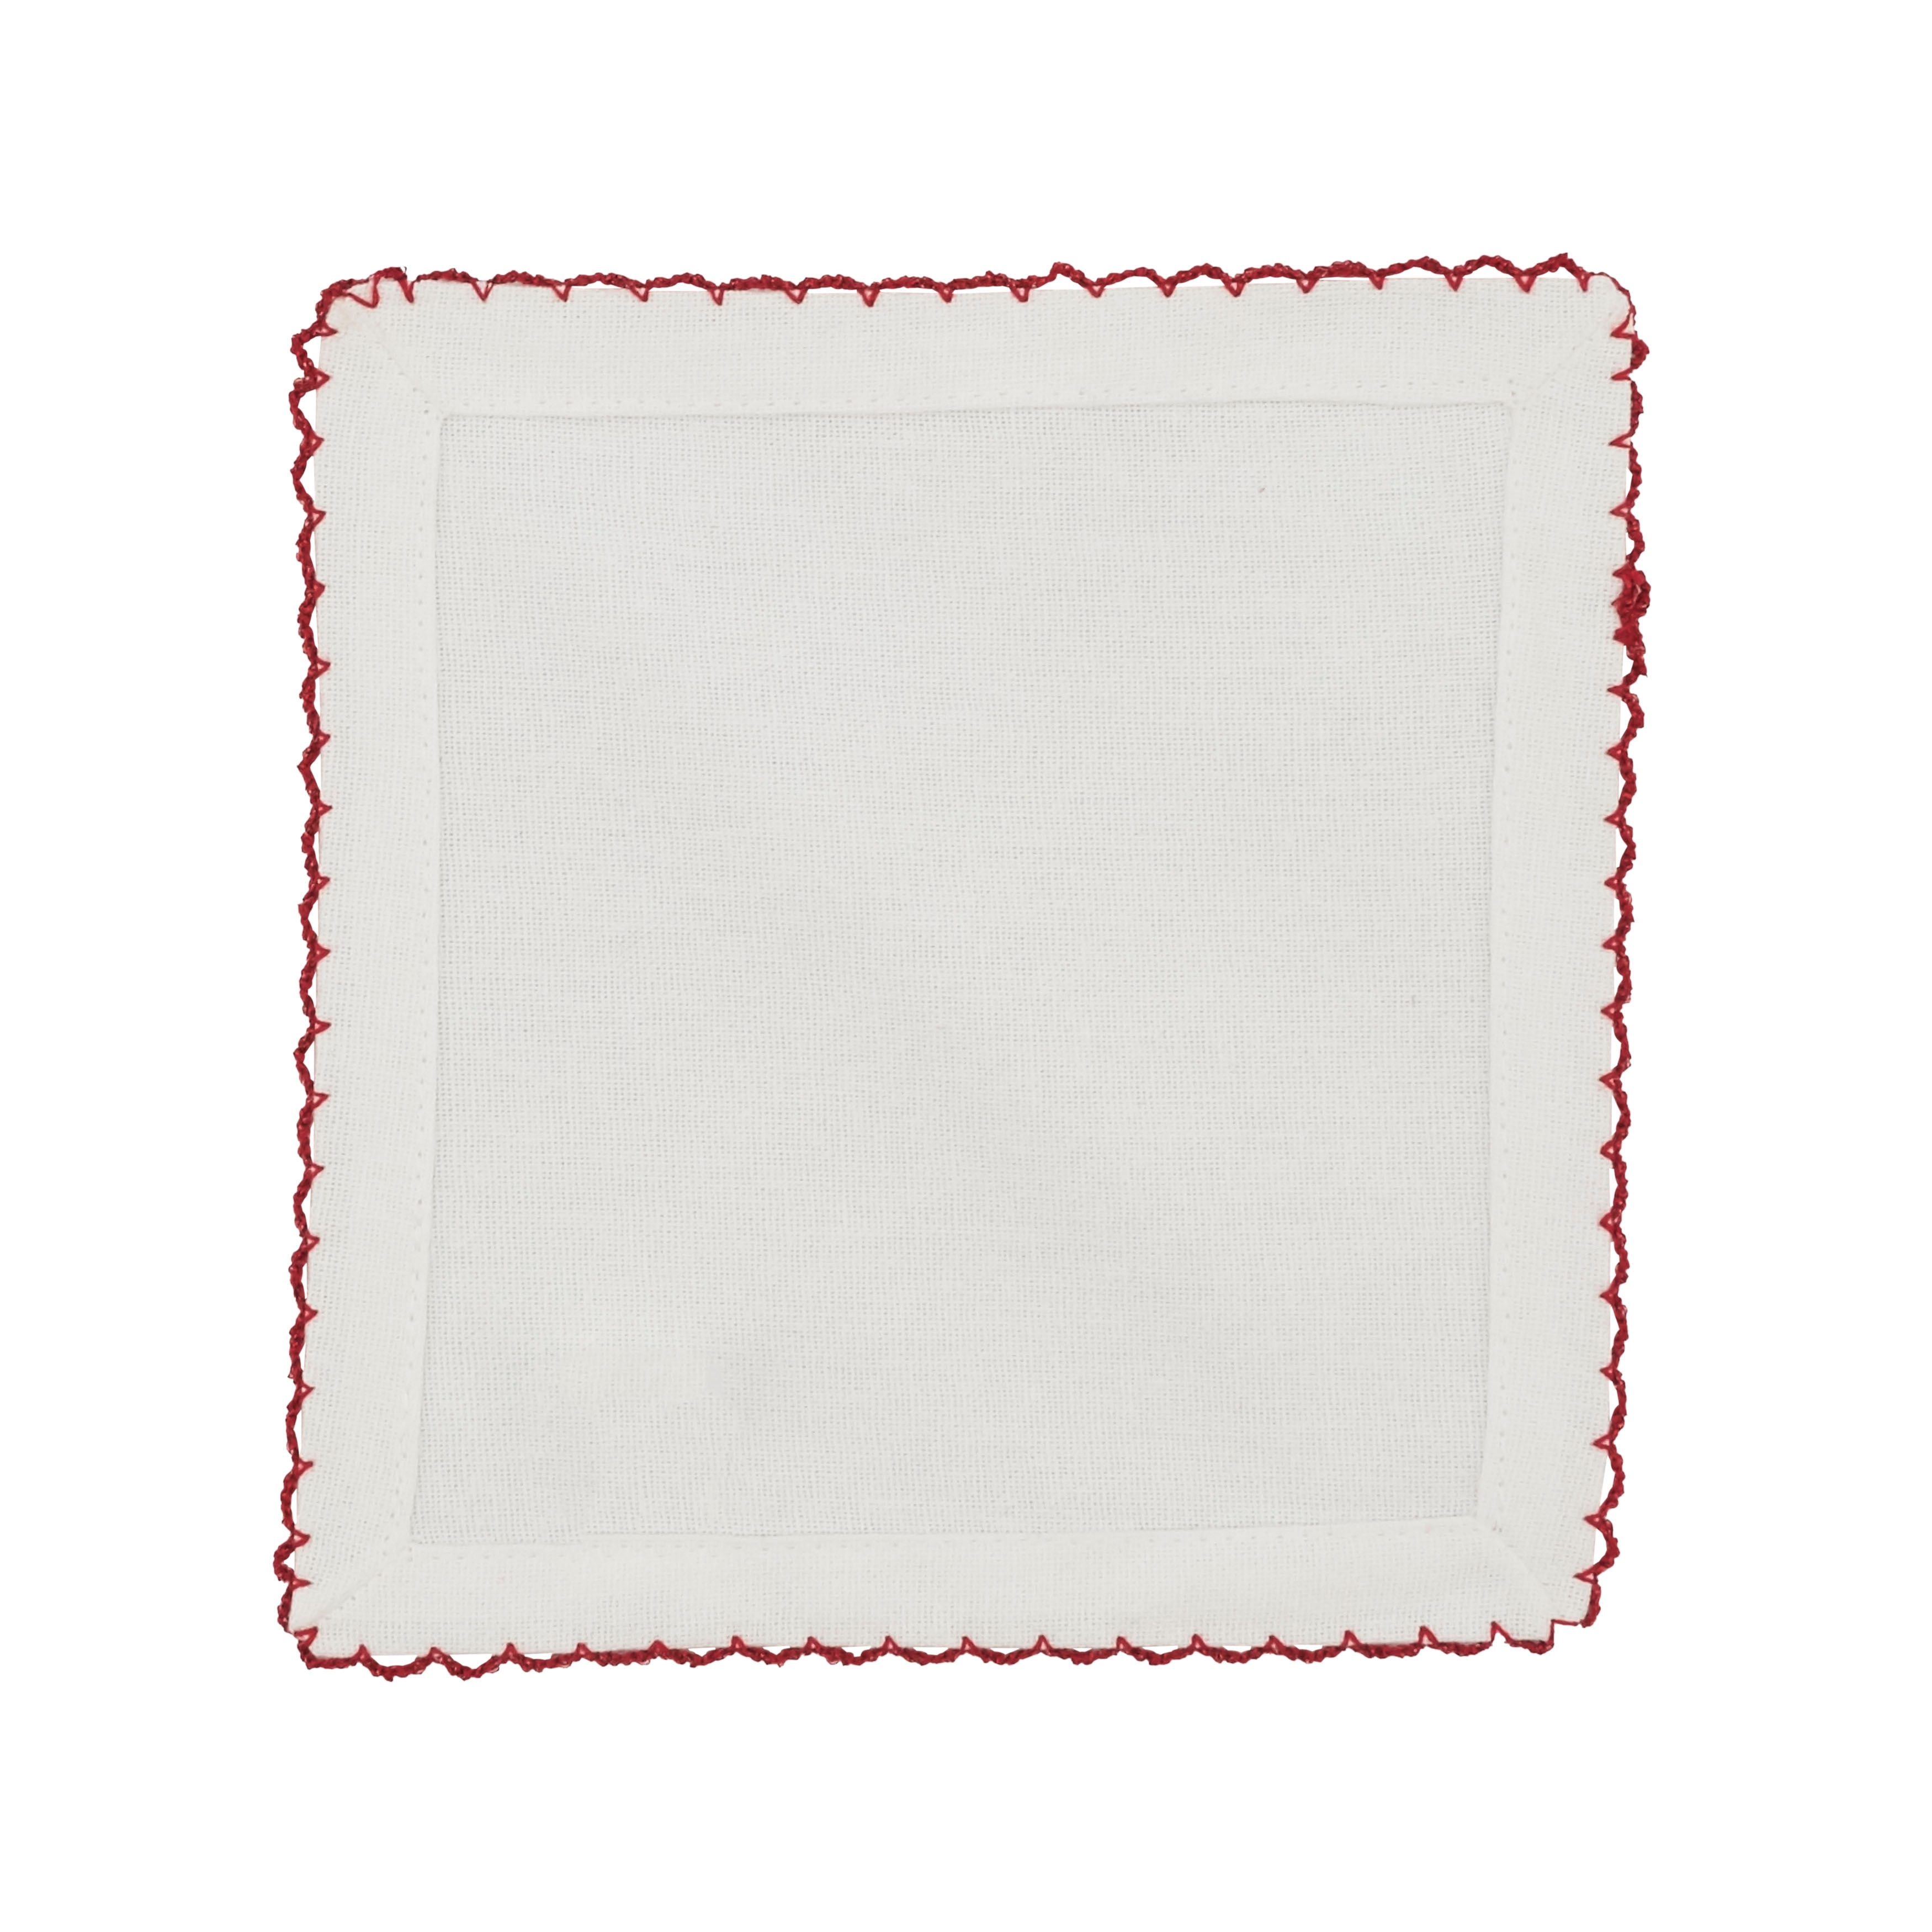 All Cotton and Linen Cotton Napkins Set of 6, White Napkins, Red Whip  Stitched Table Napkins, Embroidered Napkins, Red Napkins Cloth, Red and White  napkins, Cloth Napkins 20x20 